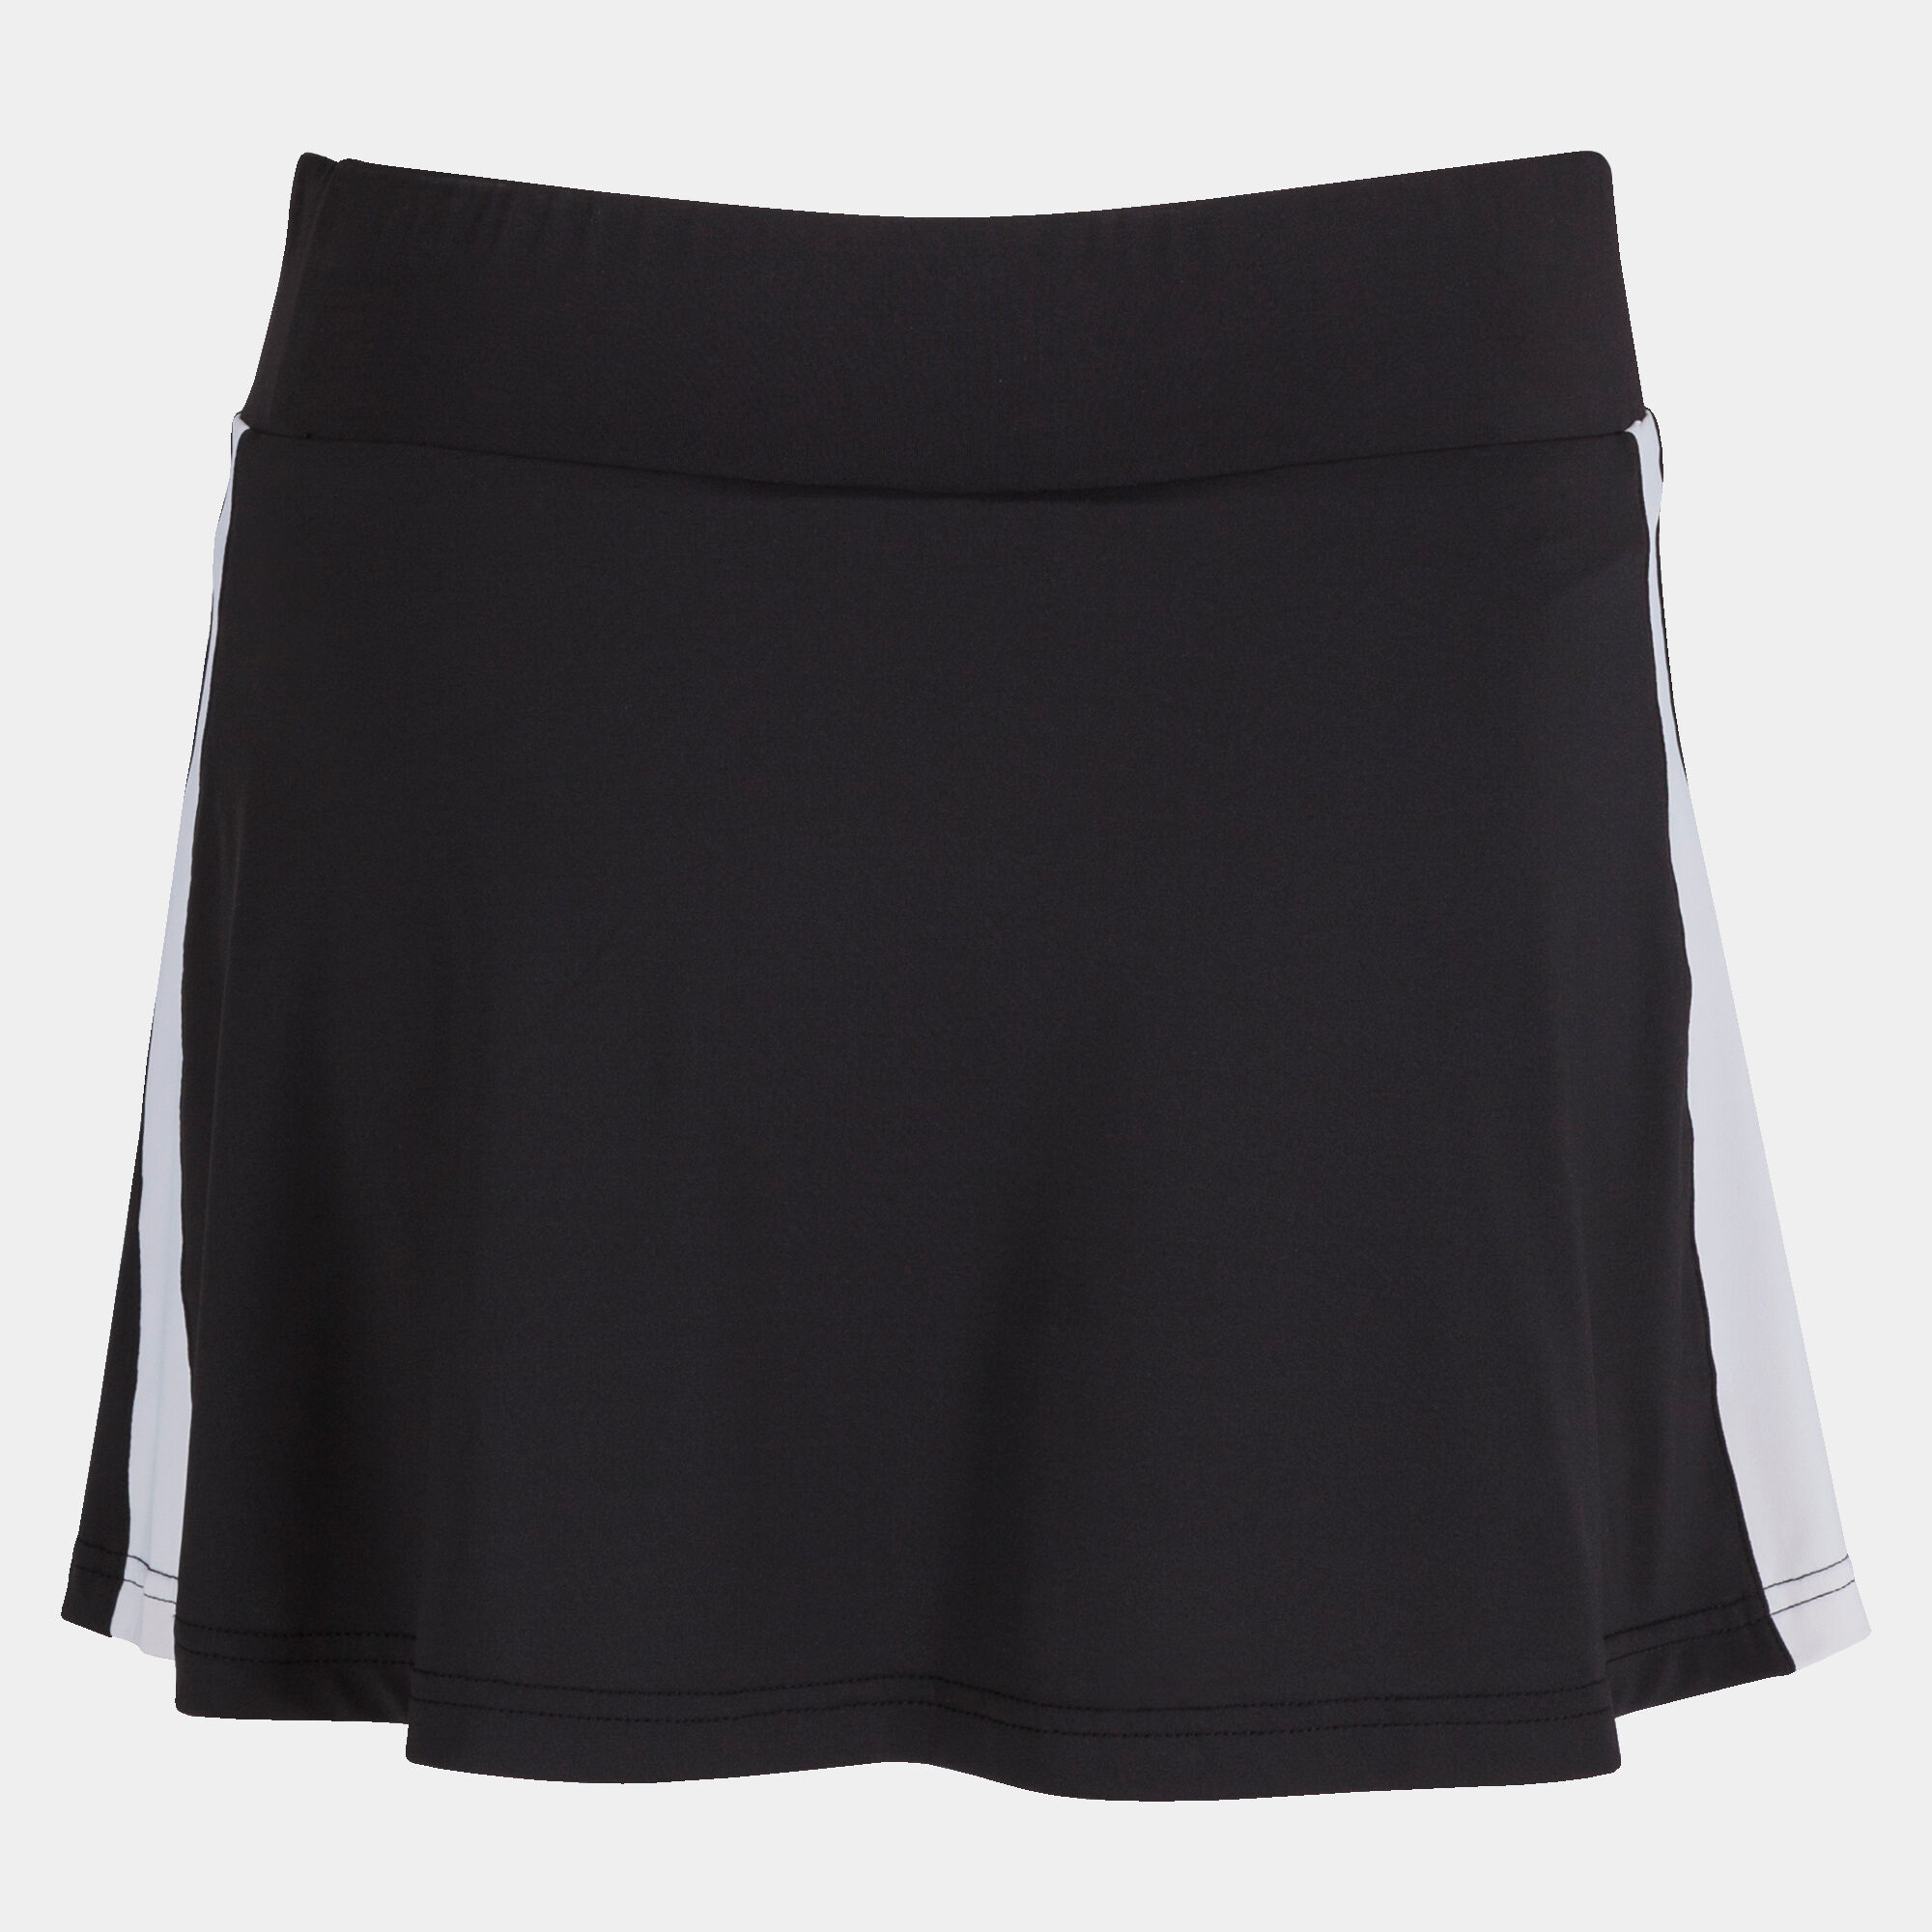 Skirt woman Torneo black white